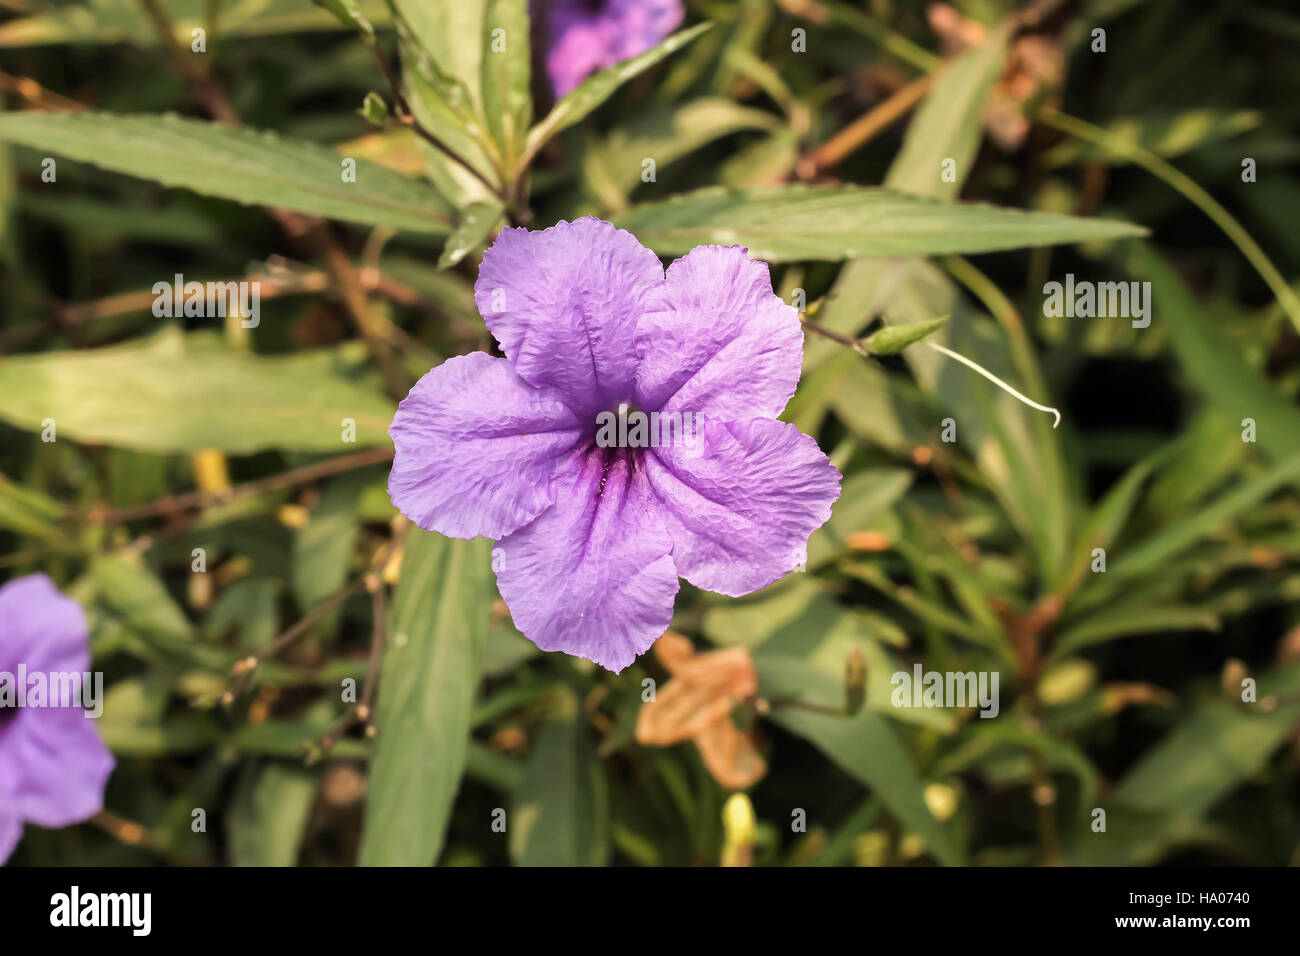 Single purple ruellias flower in the garden Stock Photo